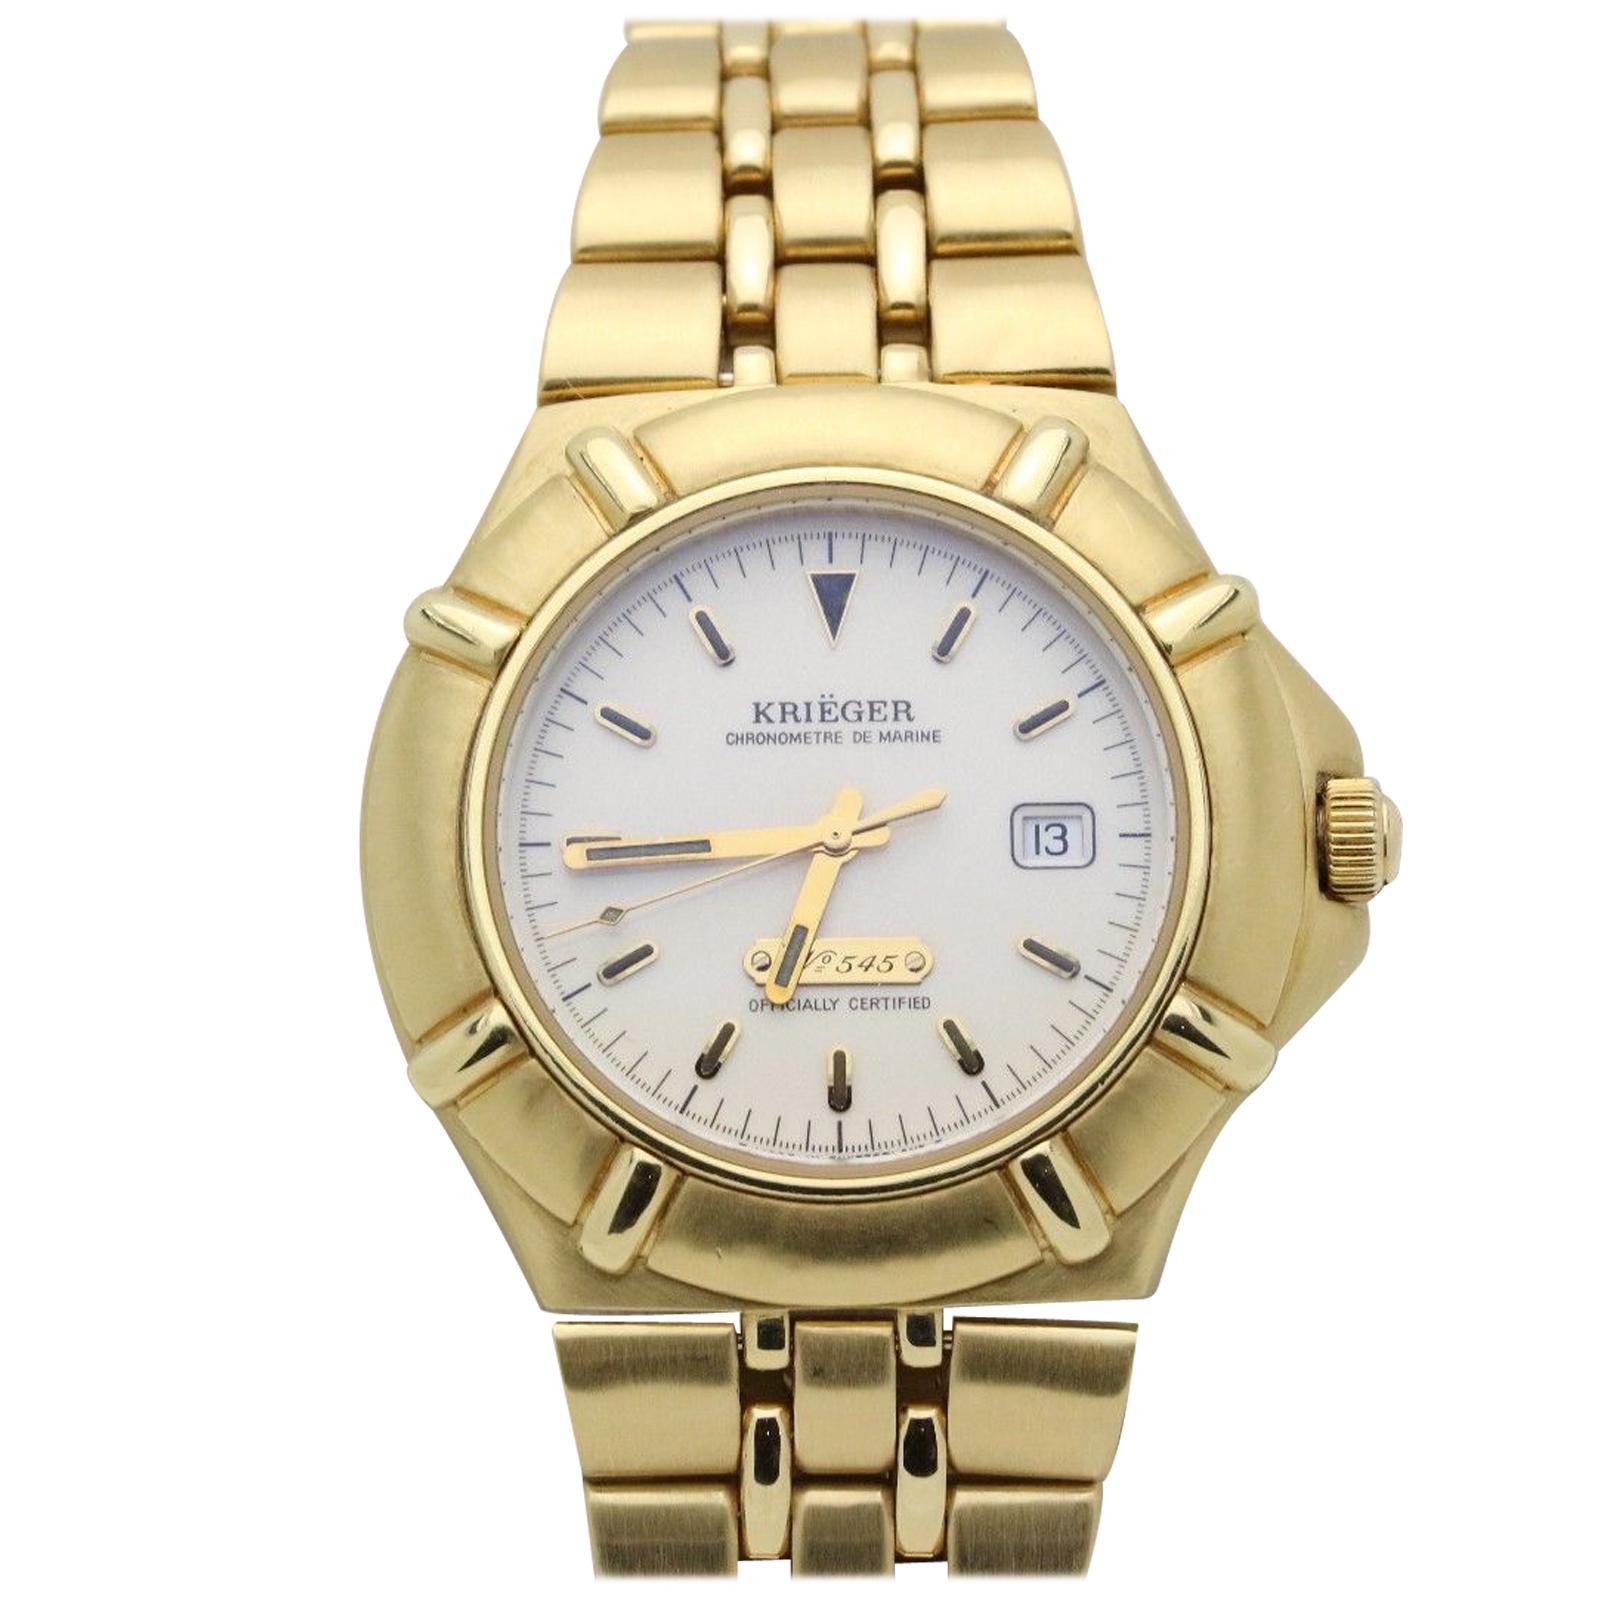 Krieger Watch K929 18 Karat Yellow Gold De Marine Limited Edition Chronometre For Sale